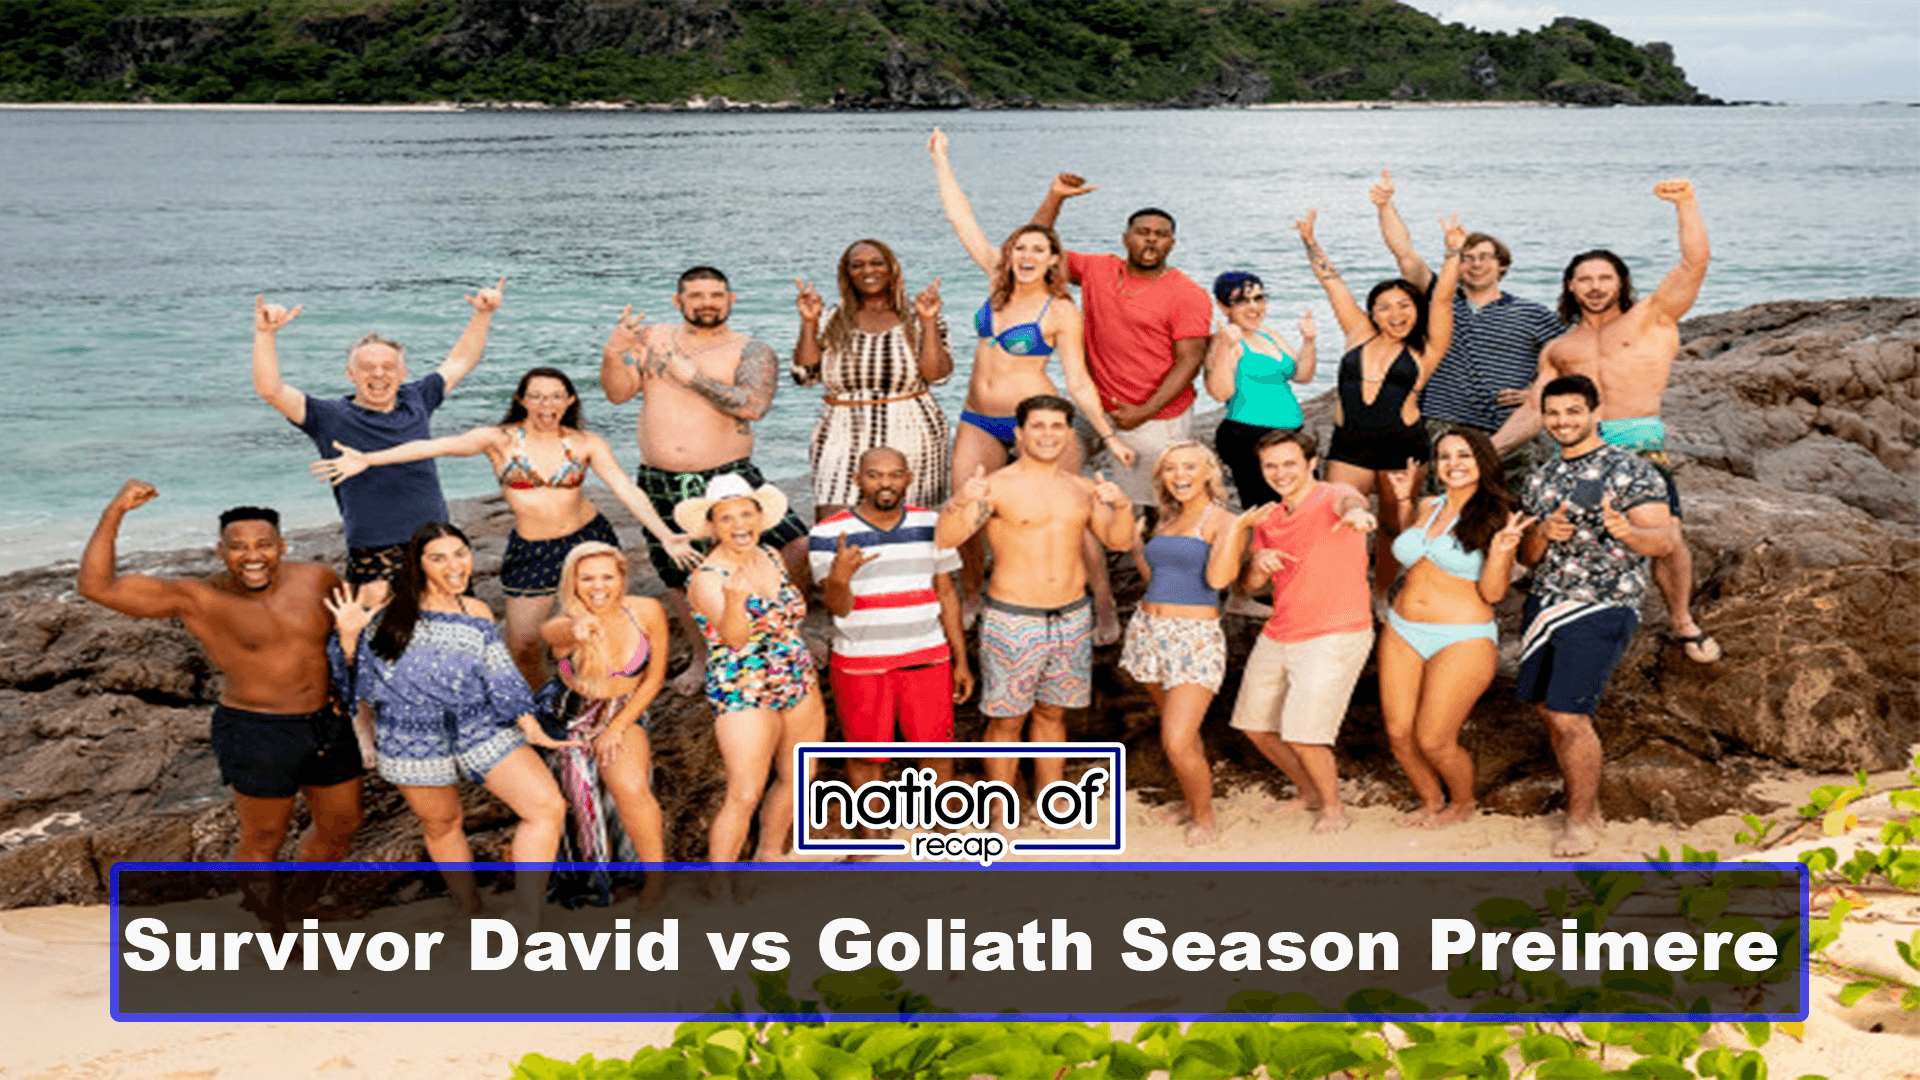 Season Premiere of Survivor David vs Goliath